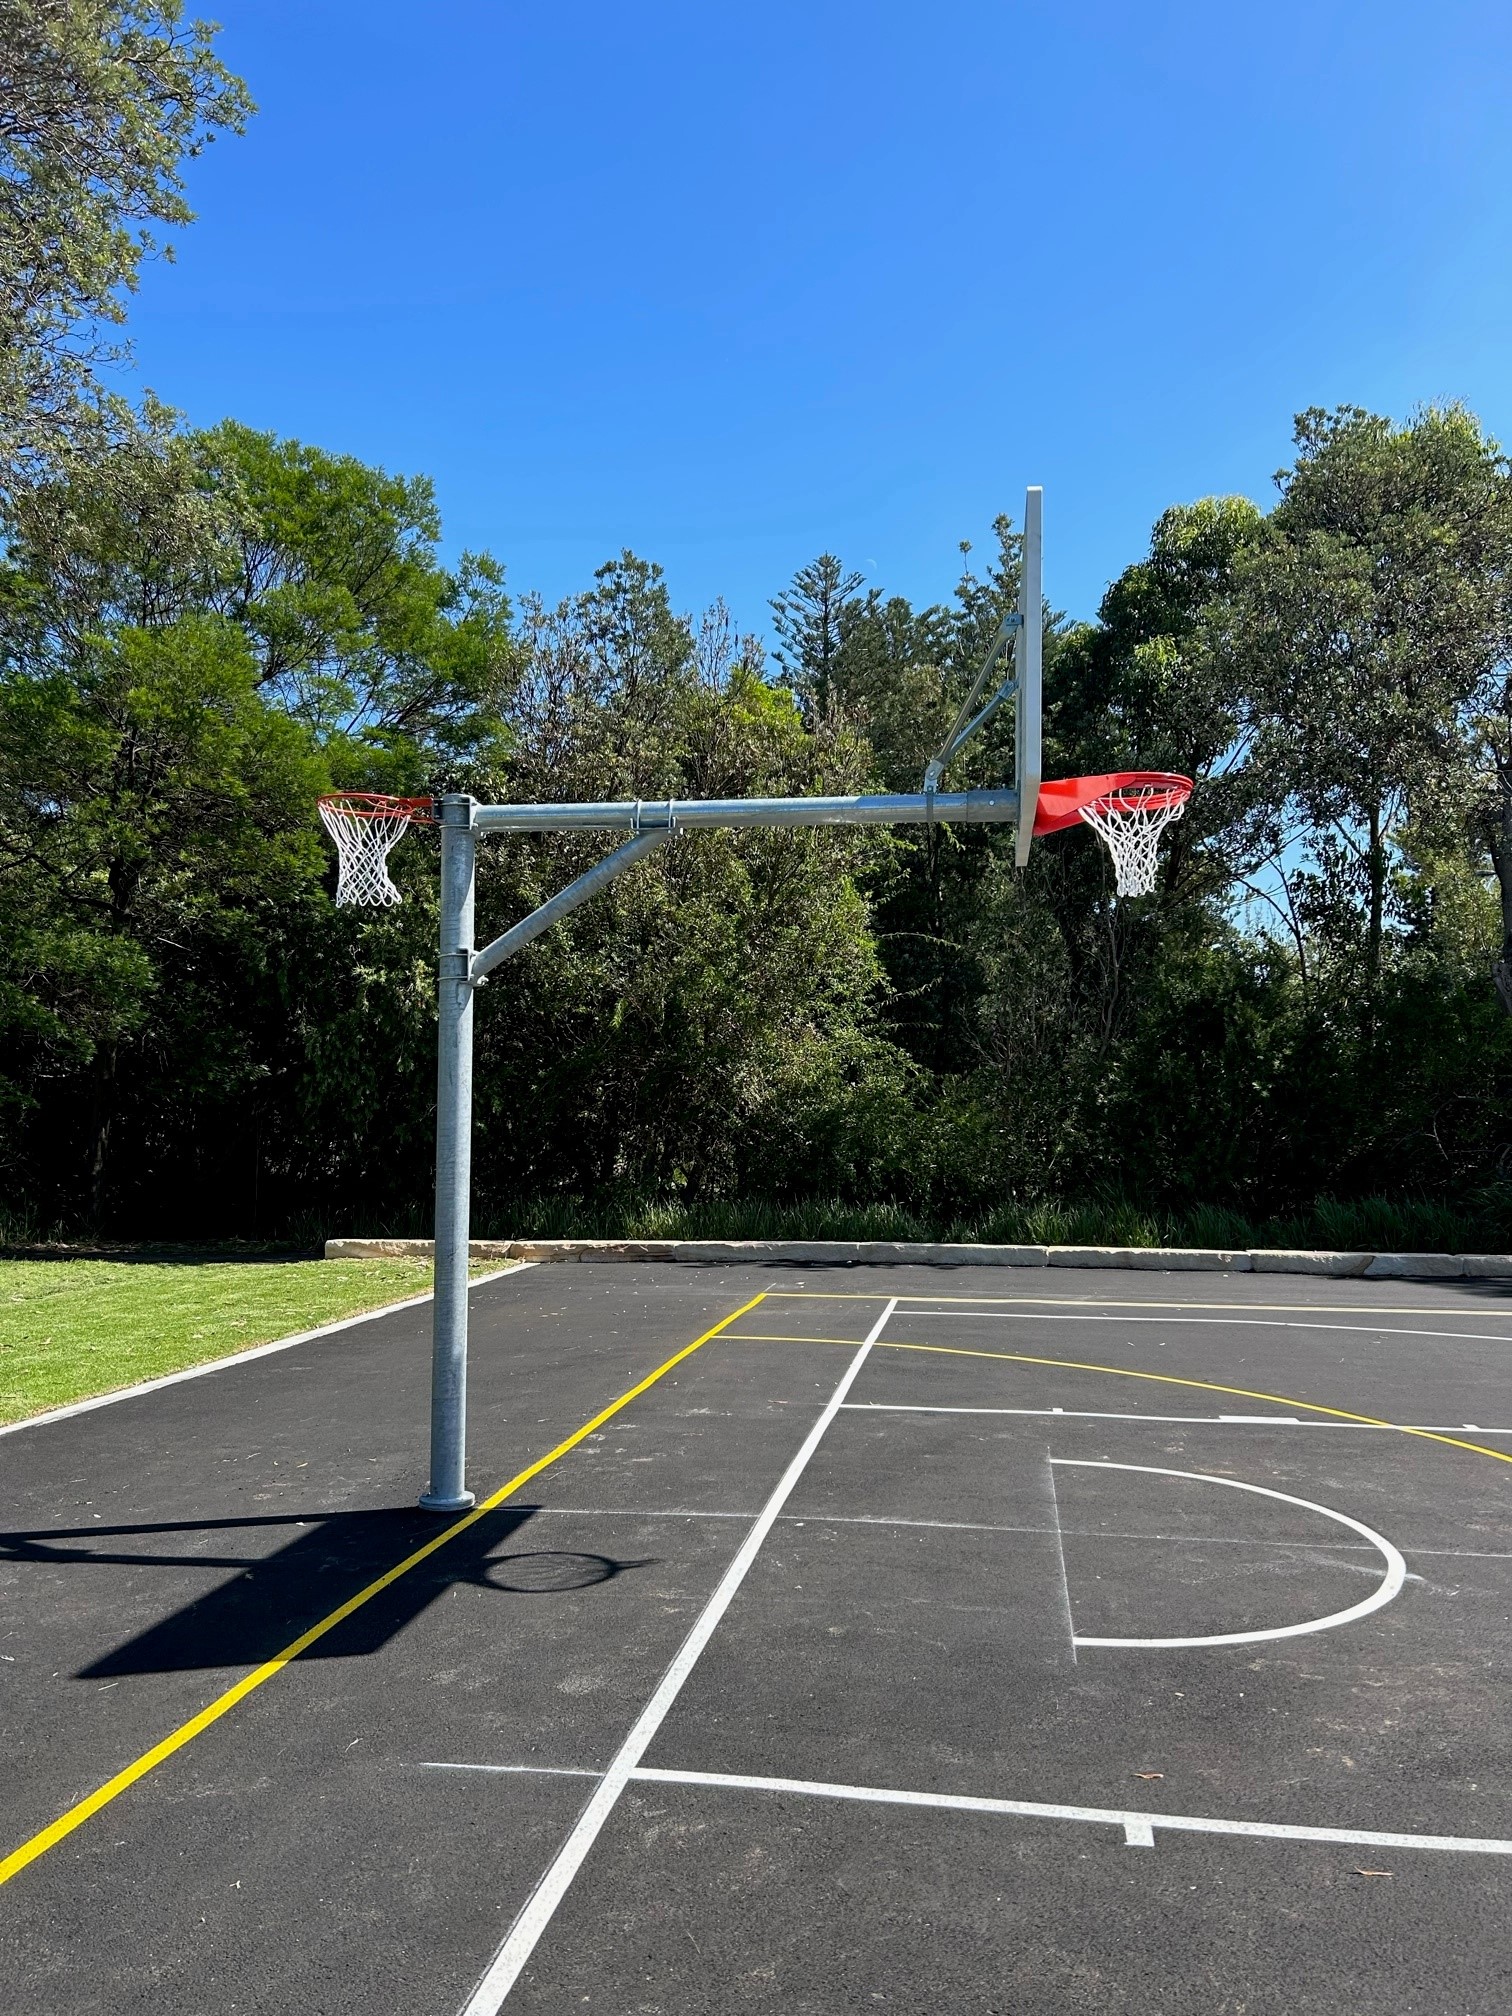 Netball and Basketball Hoops on court